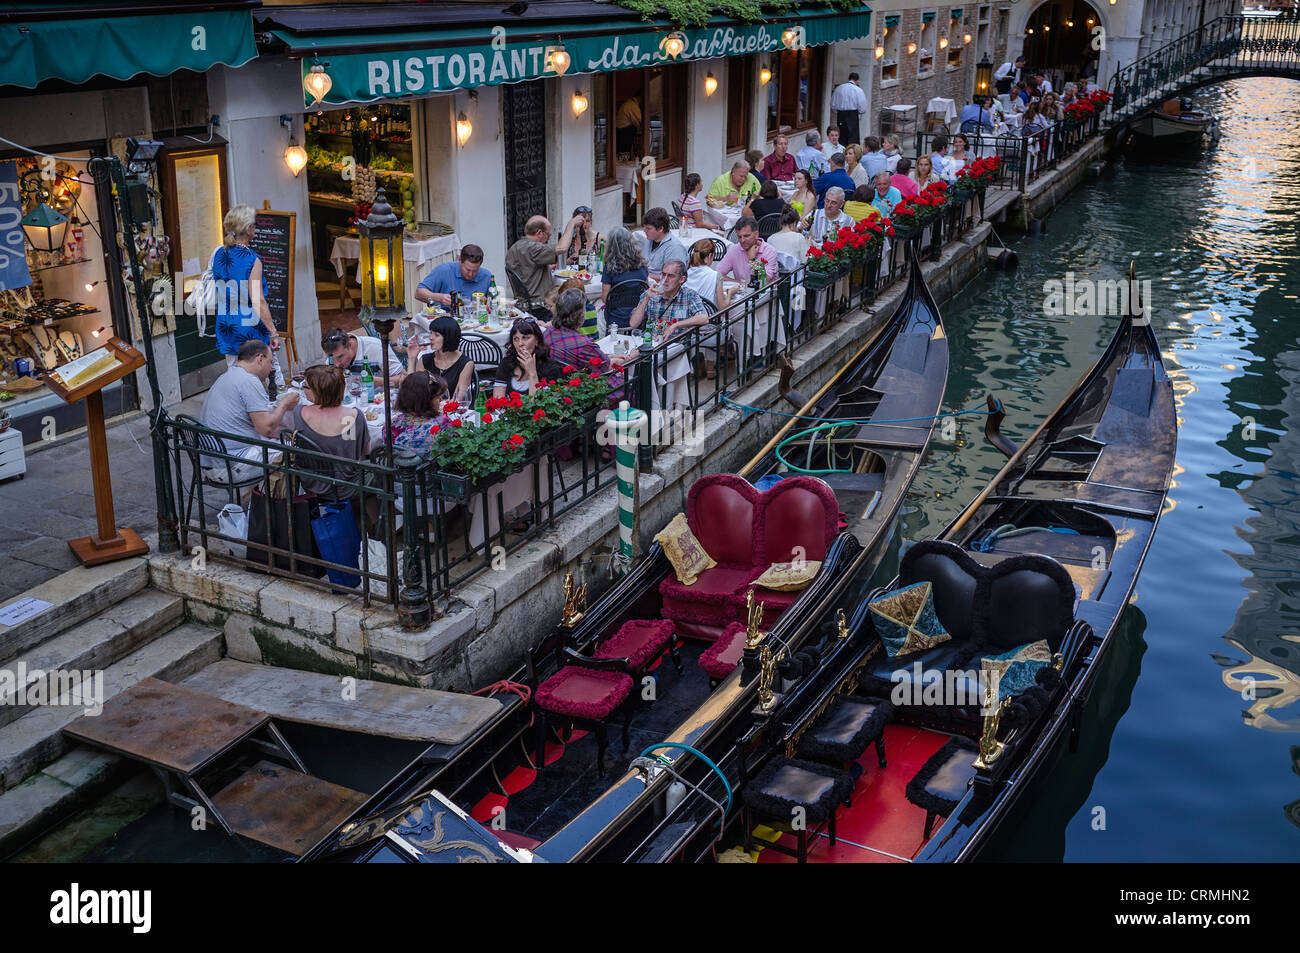 Gondolas moored alongside the Ristorante Da Raffaele in Venice Stock Photo